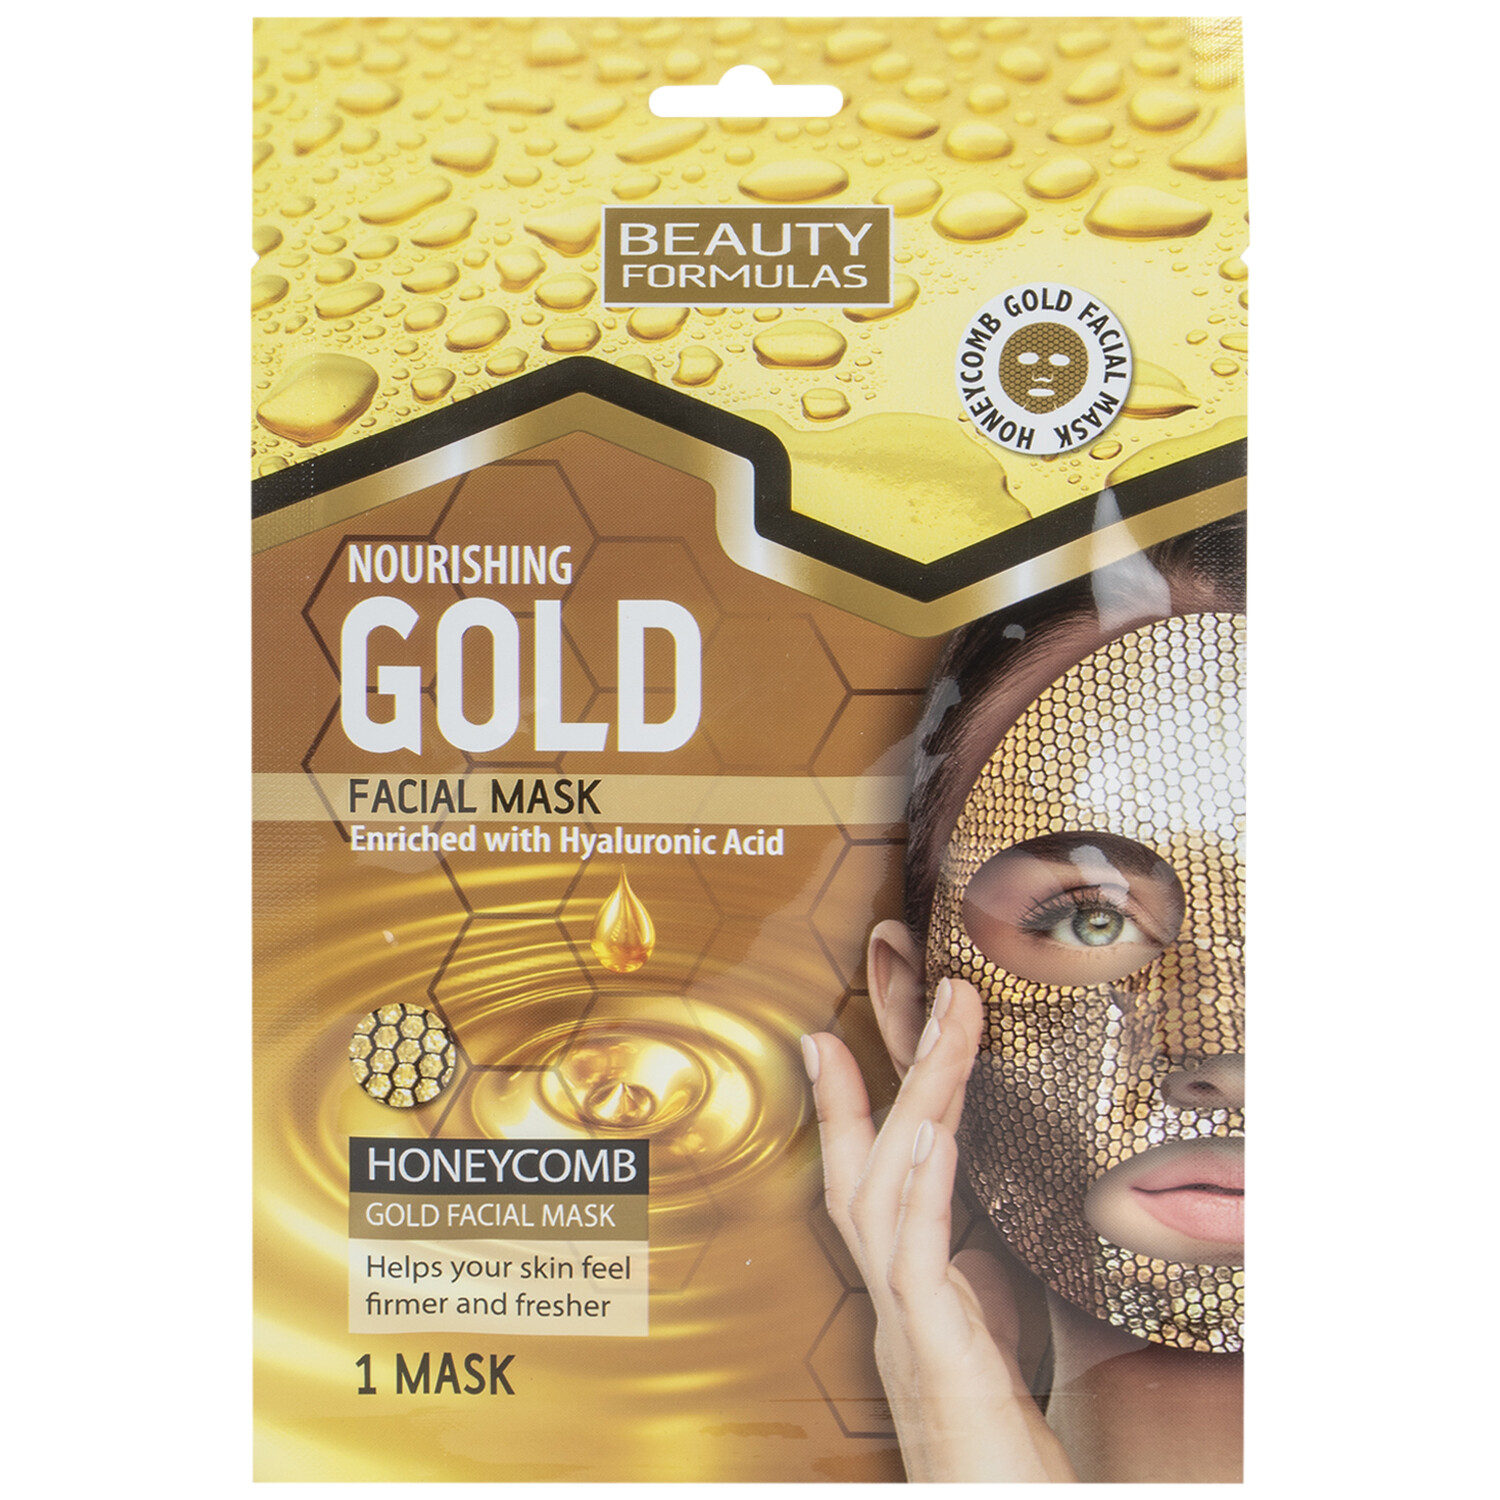 Nourishing Gold Facial Mask Image